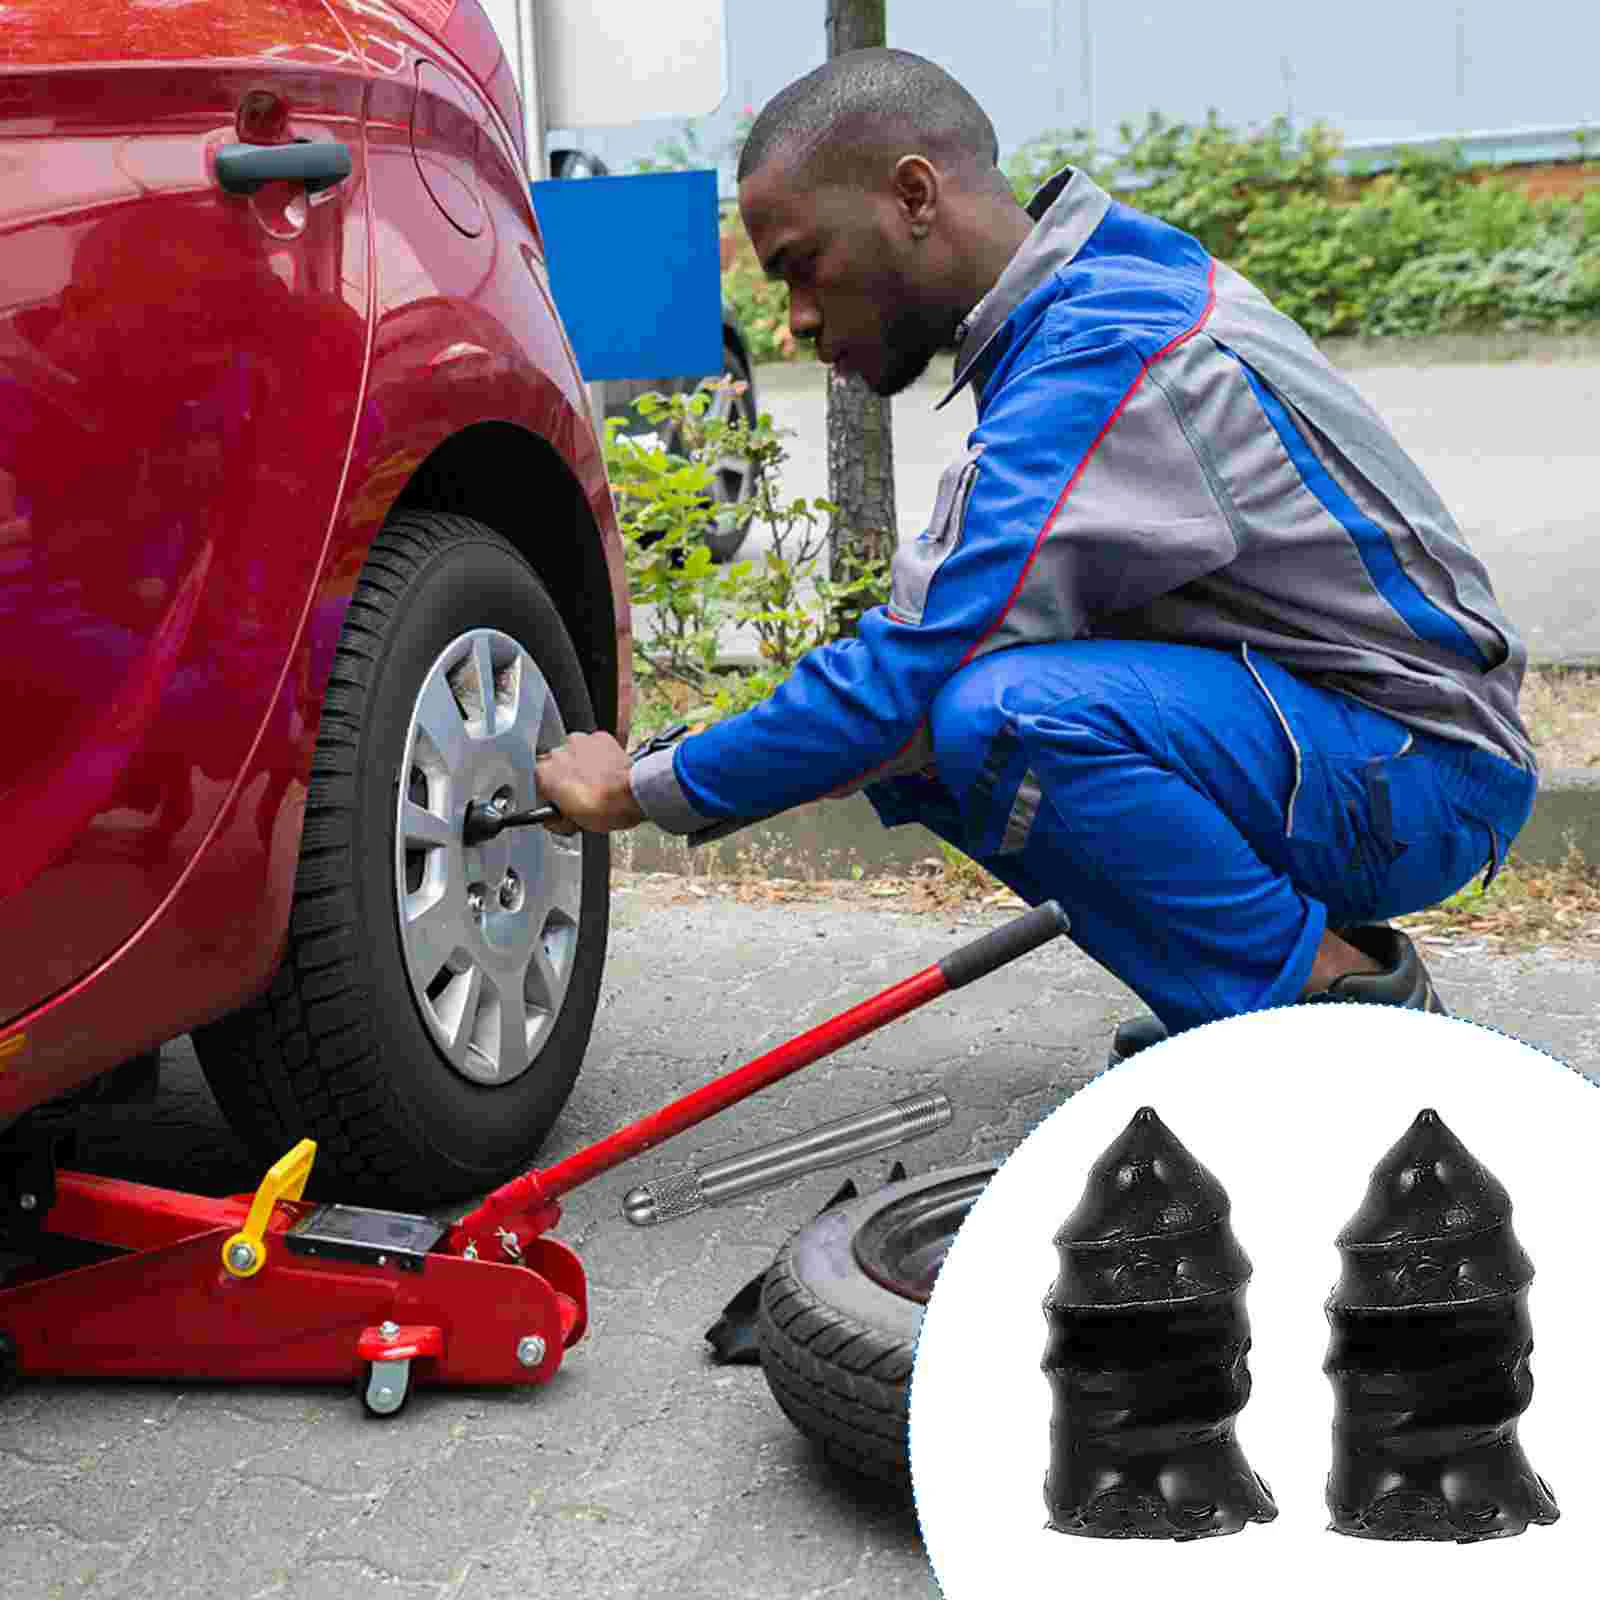 

Tire Sealant Car Repair Anti-skid Screws Nails Tires Wheel Spike Auto Supplies Winter Lugs Kit Studs Practical Kicked tool